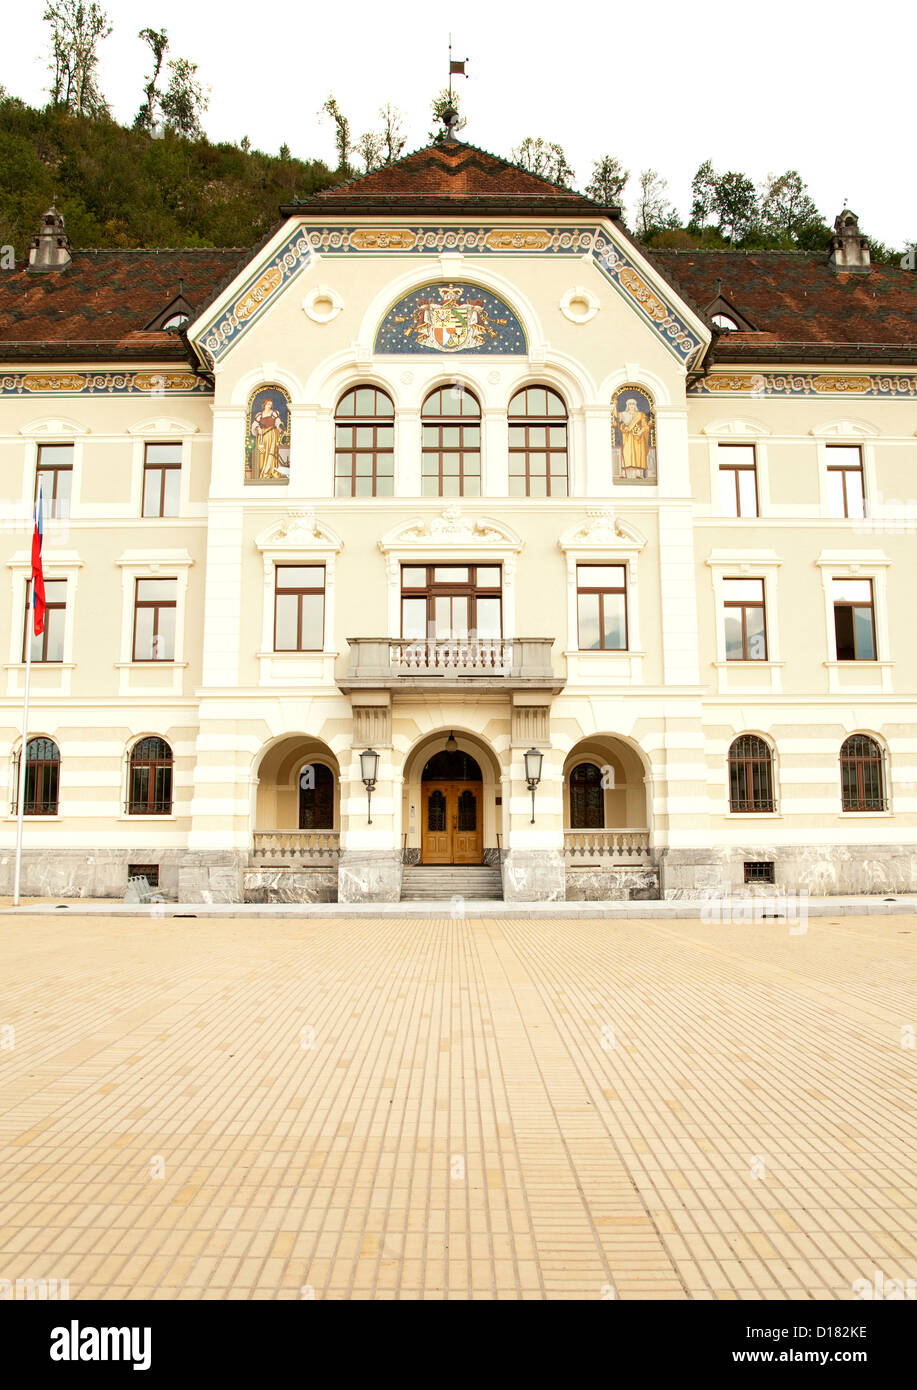 Il Regierungsgebäude (Governo / edificio del parlamento) a Vaduz, la capitale del principato del Liechtenstein. Foto Stock